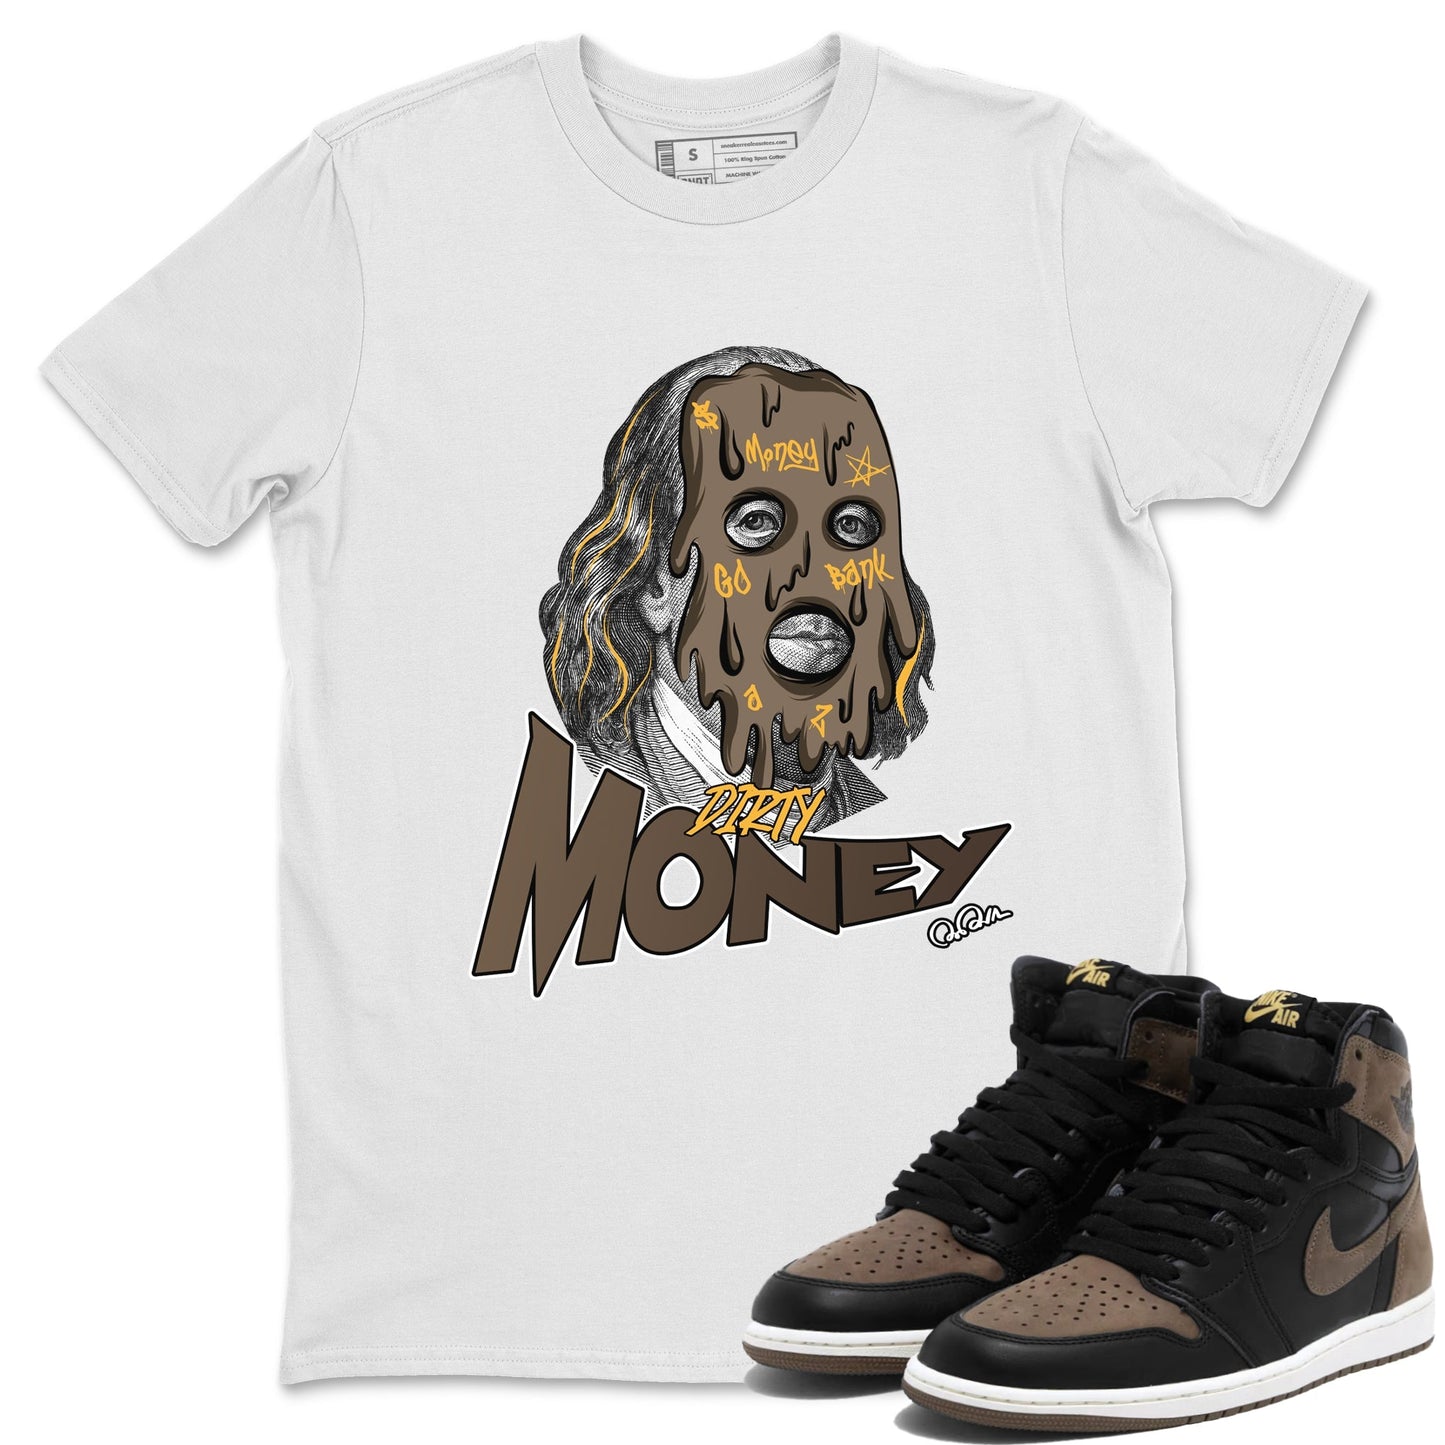 Air Jordan 1 Palomino shirt to match jordans Dirty Money Streetwear Sneaker Shirt AJ1 High Palomino Drip Gear Zone Sneaker Matching Clothing Unisex White 1 T-Shirt